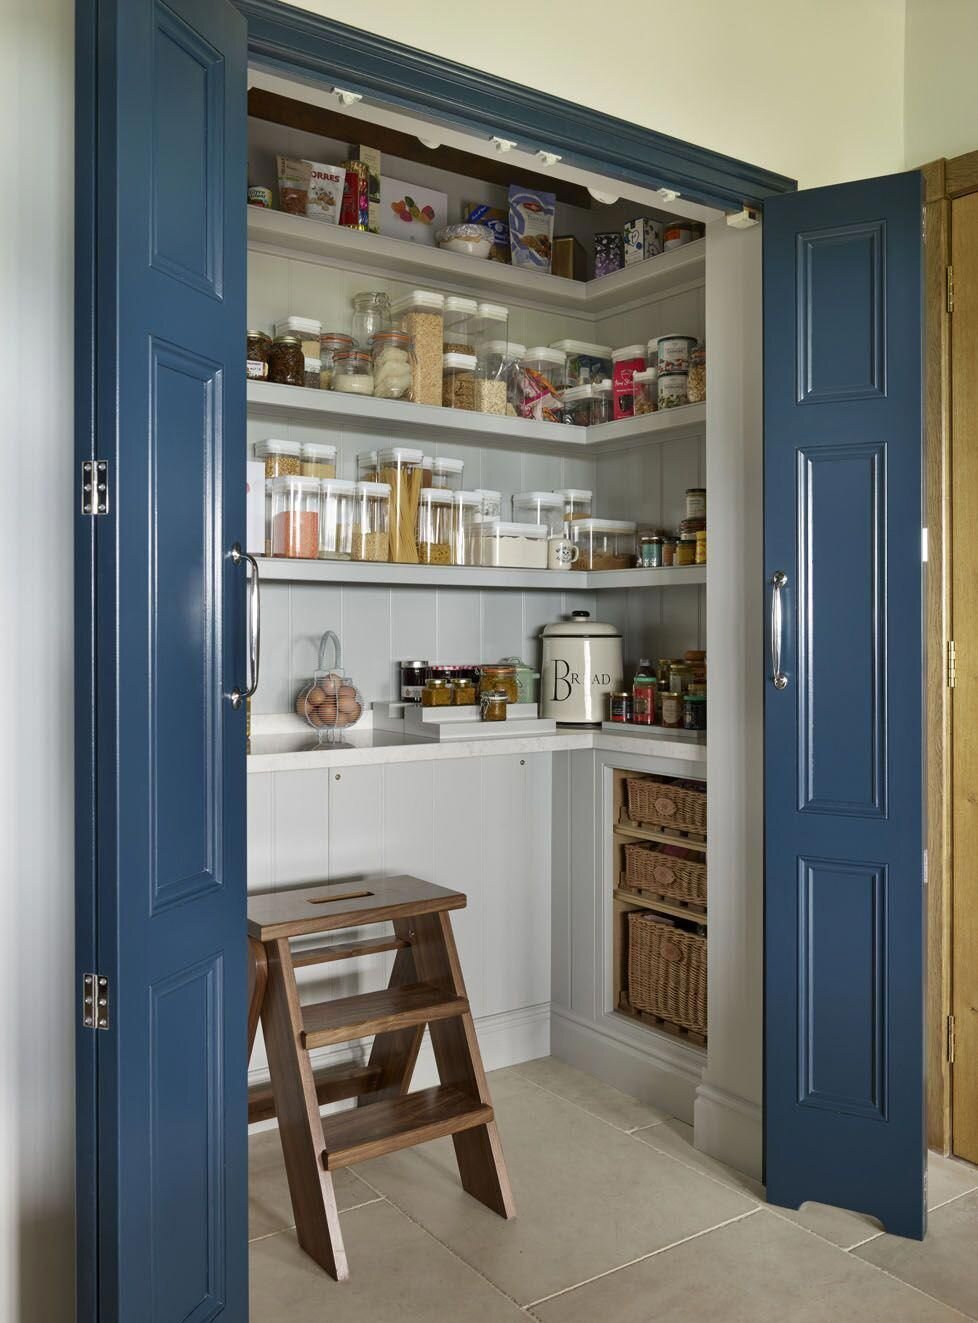 Kitchen storage ideas_ 27 space-saving solutions.jpeg